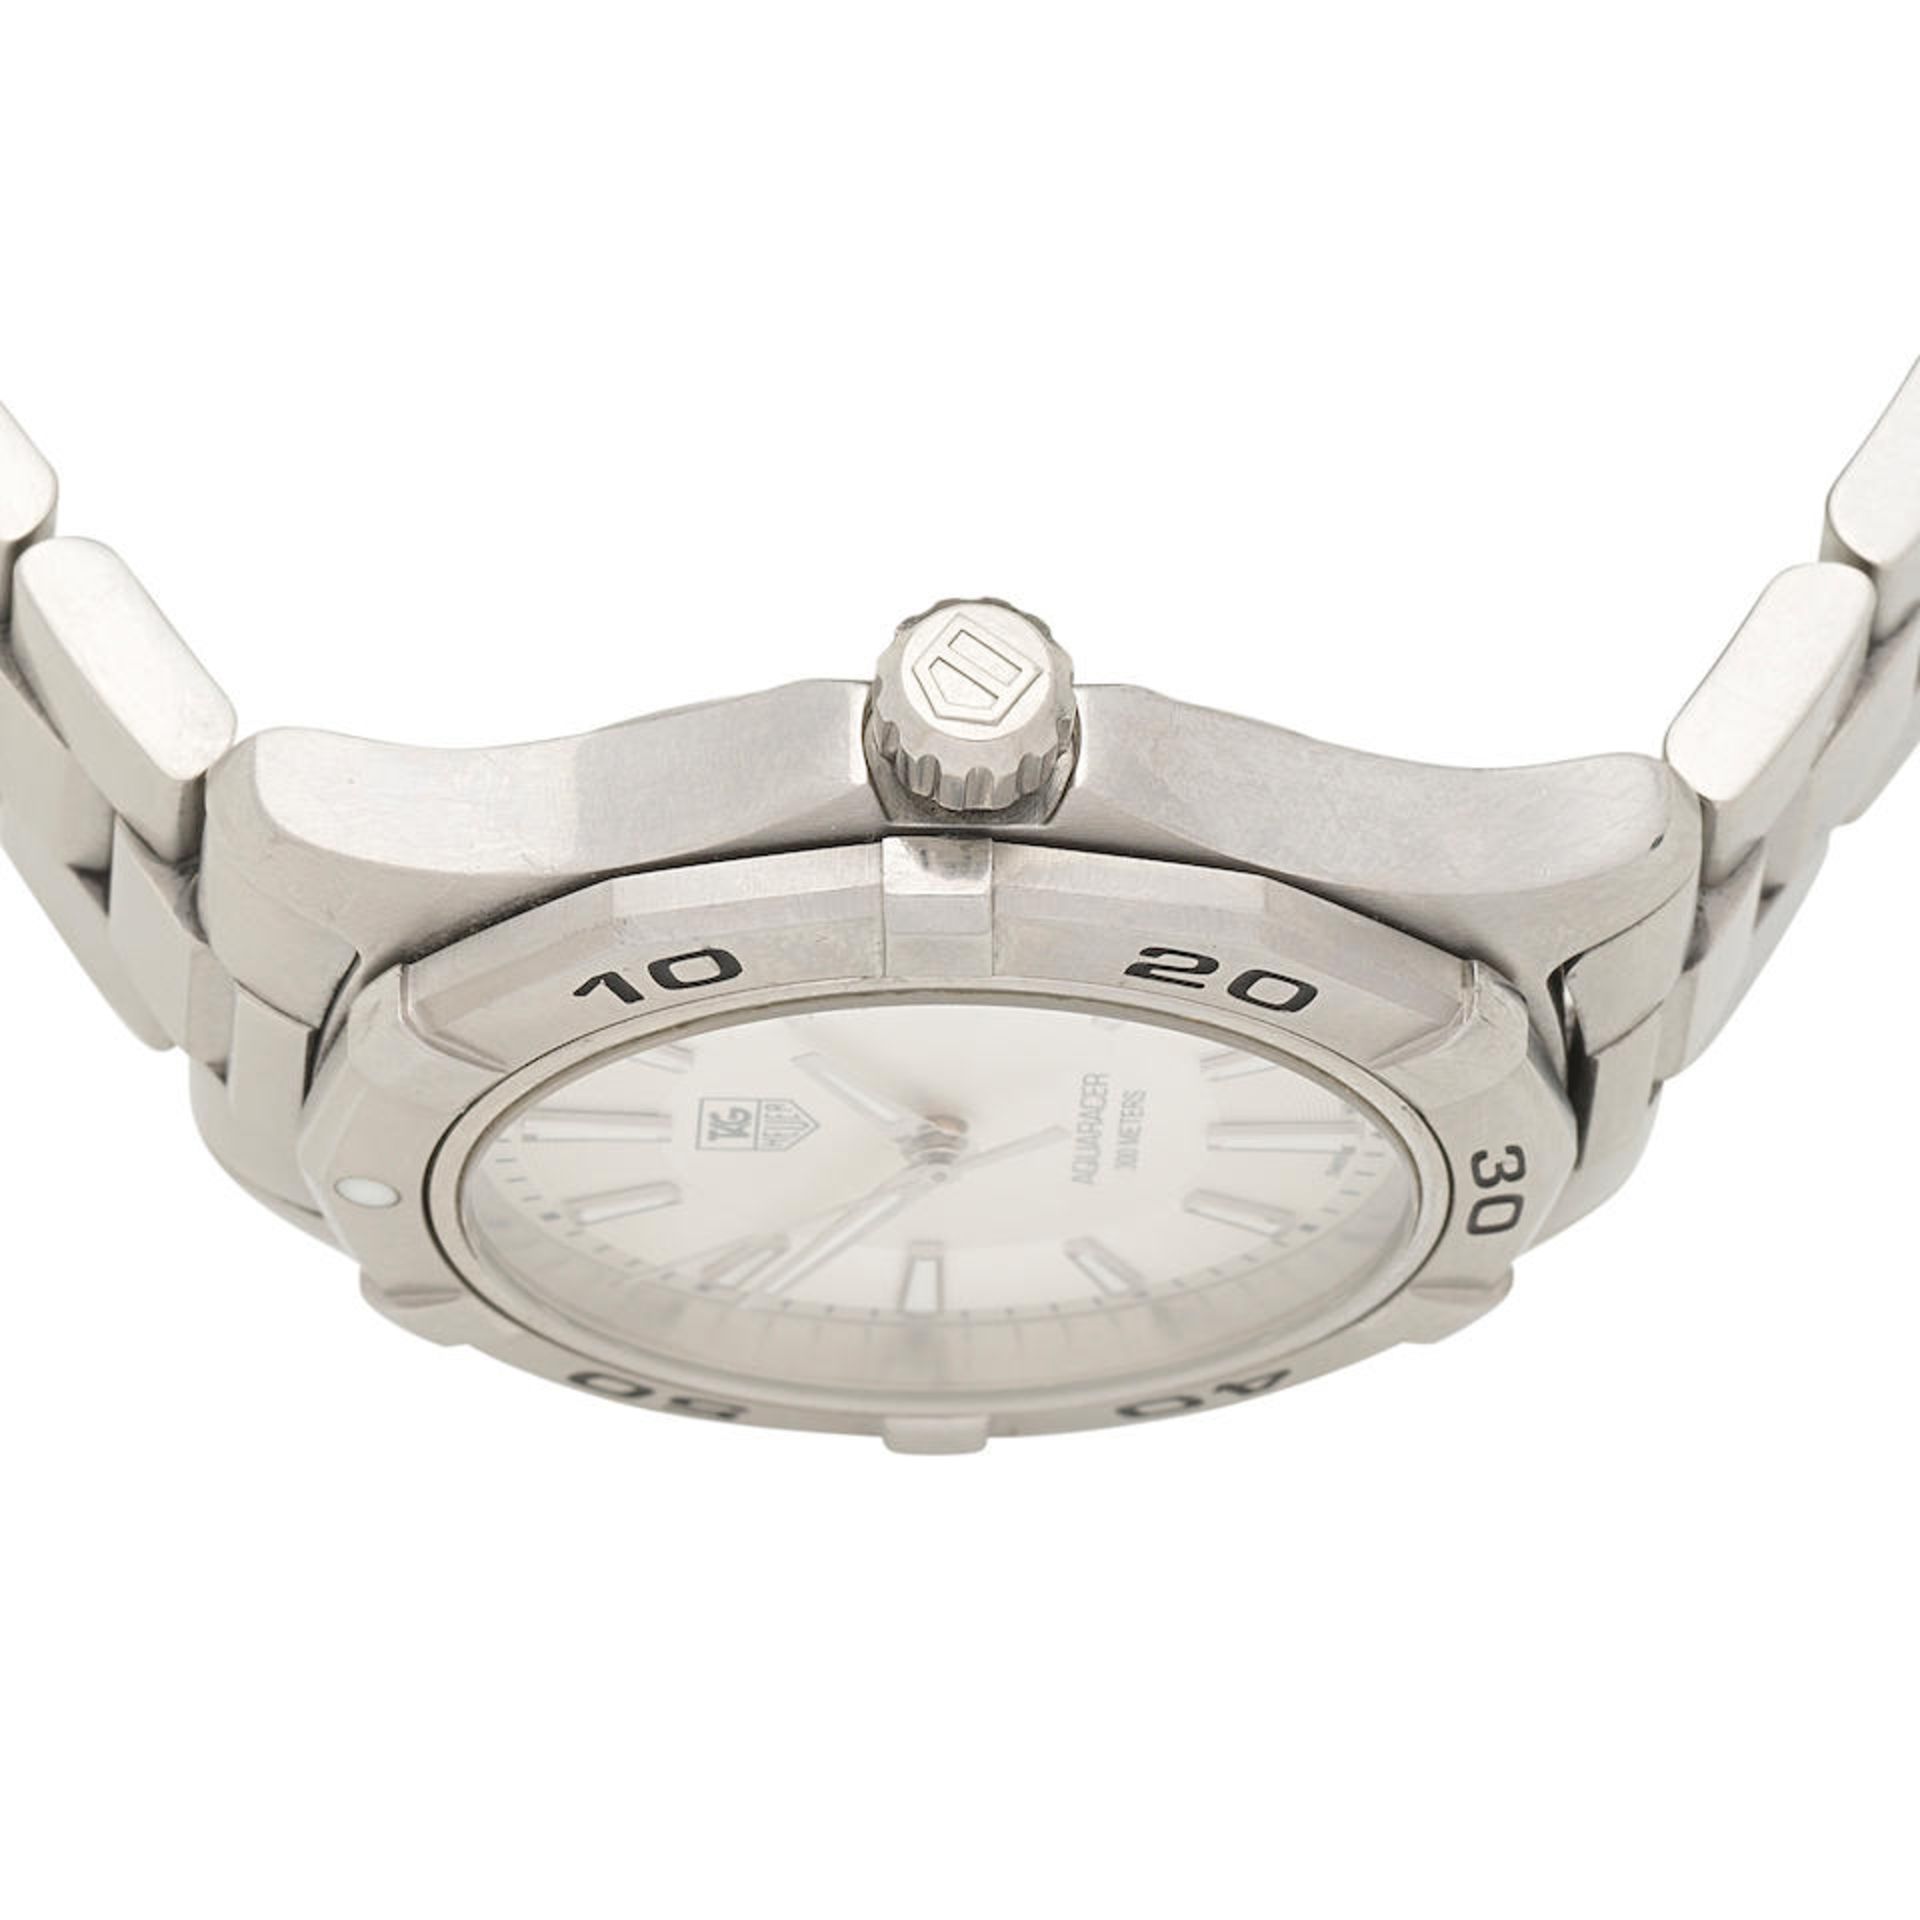 TAG Heuer. A stainless steel quartz calendar bracelet watch Aquaracer, Ref: WAP1111, Circa 2010 - Image 3 of 4